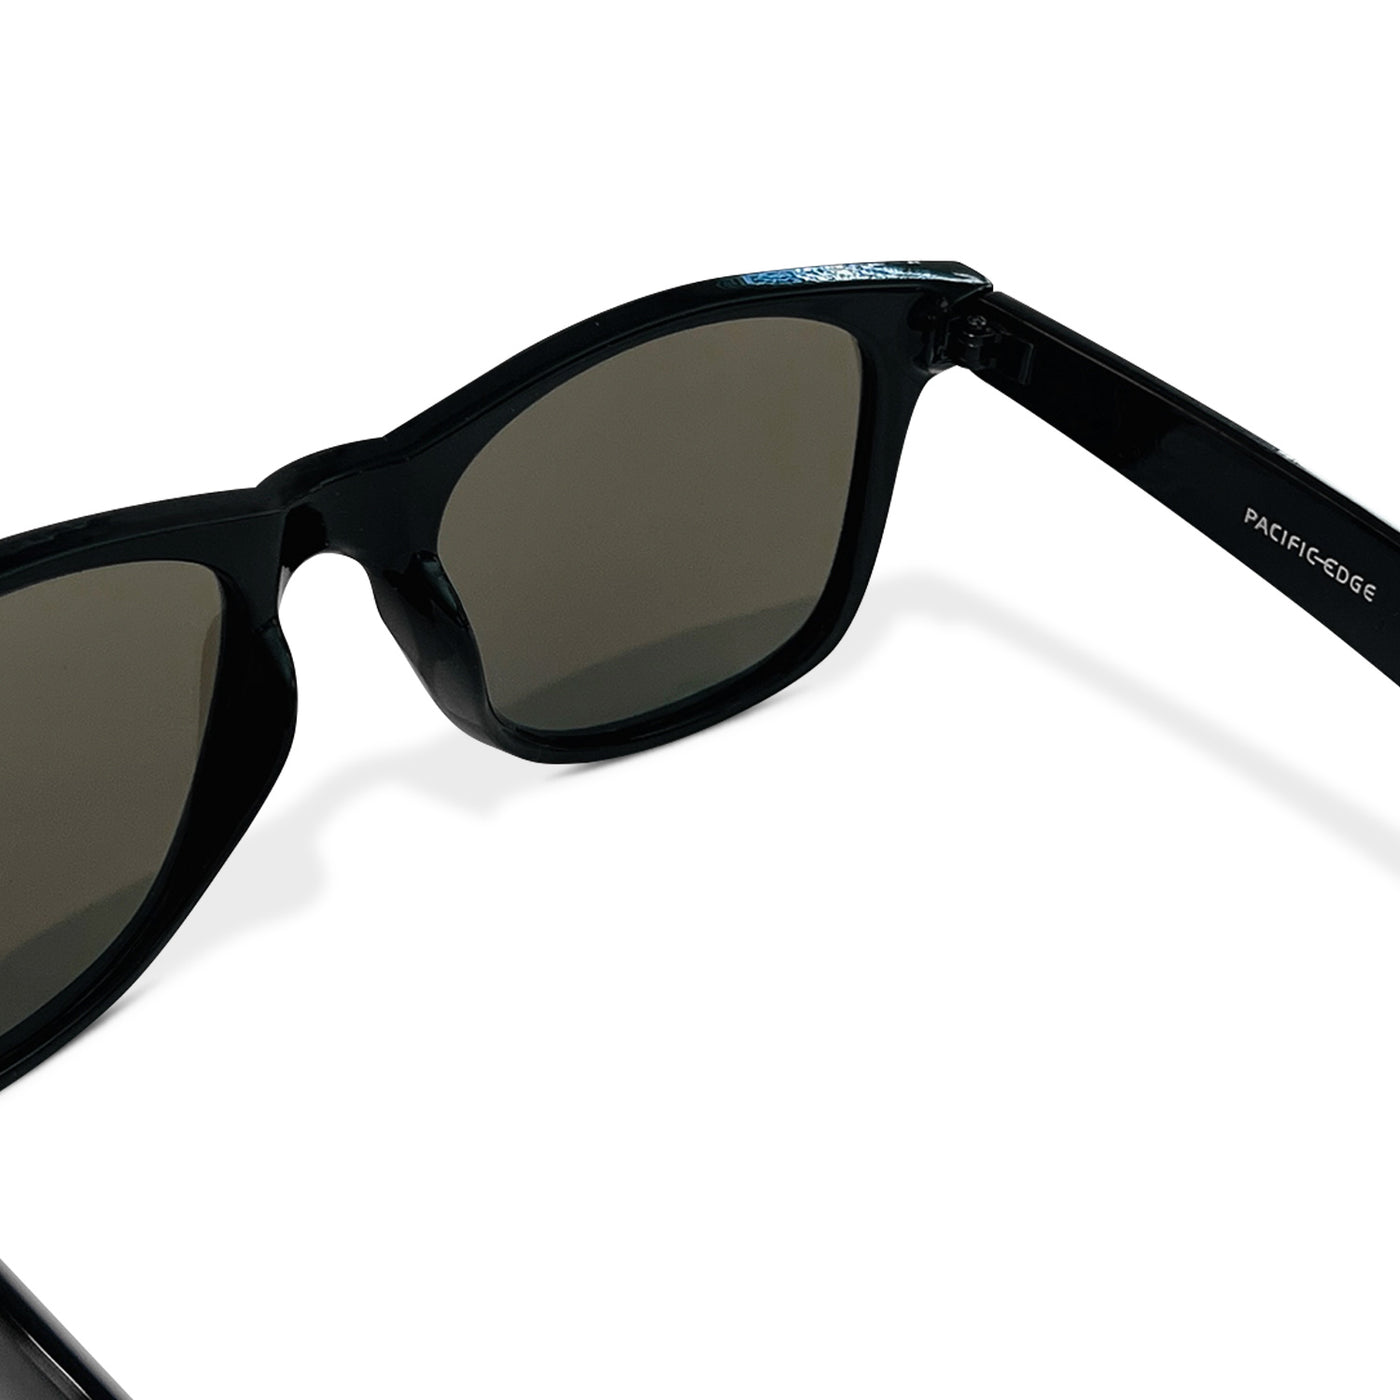 Pacific Edge Polarized Classic Sunglasses - Black Frame & Blue Lens back